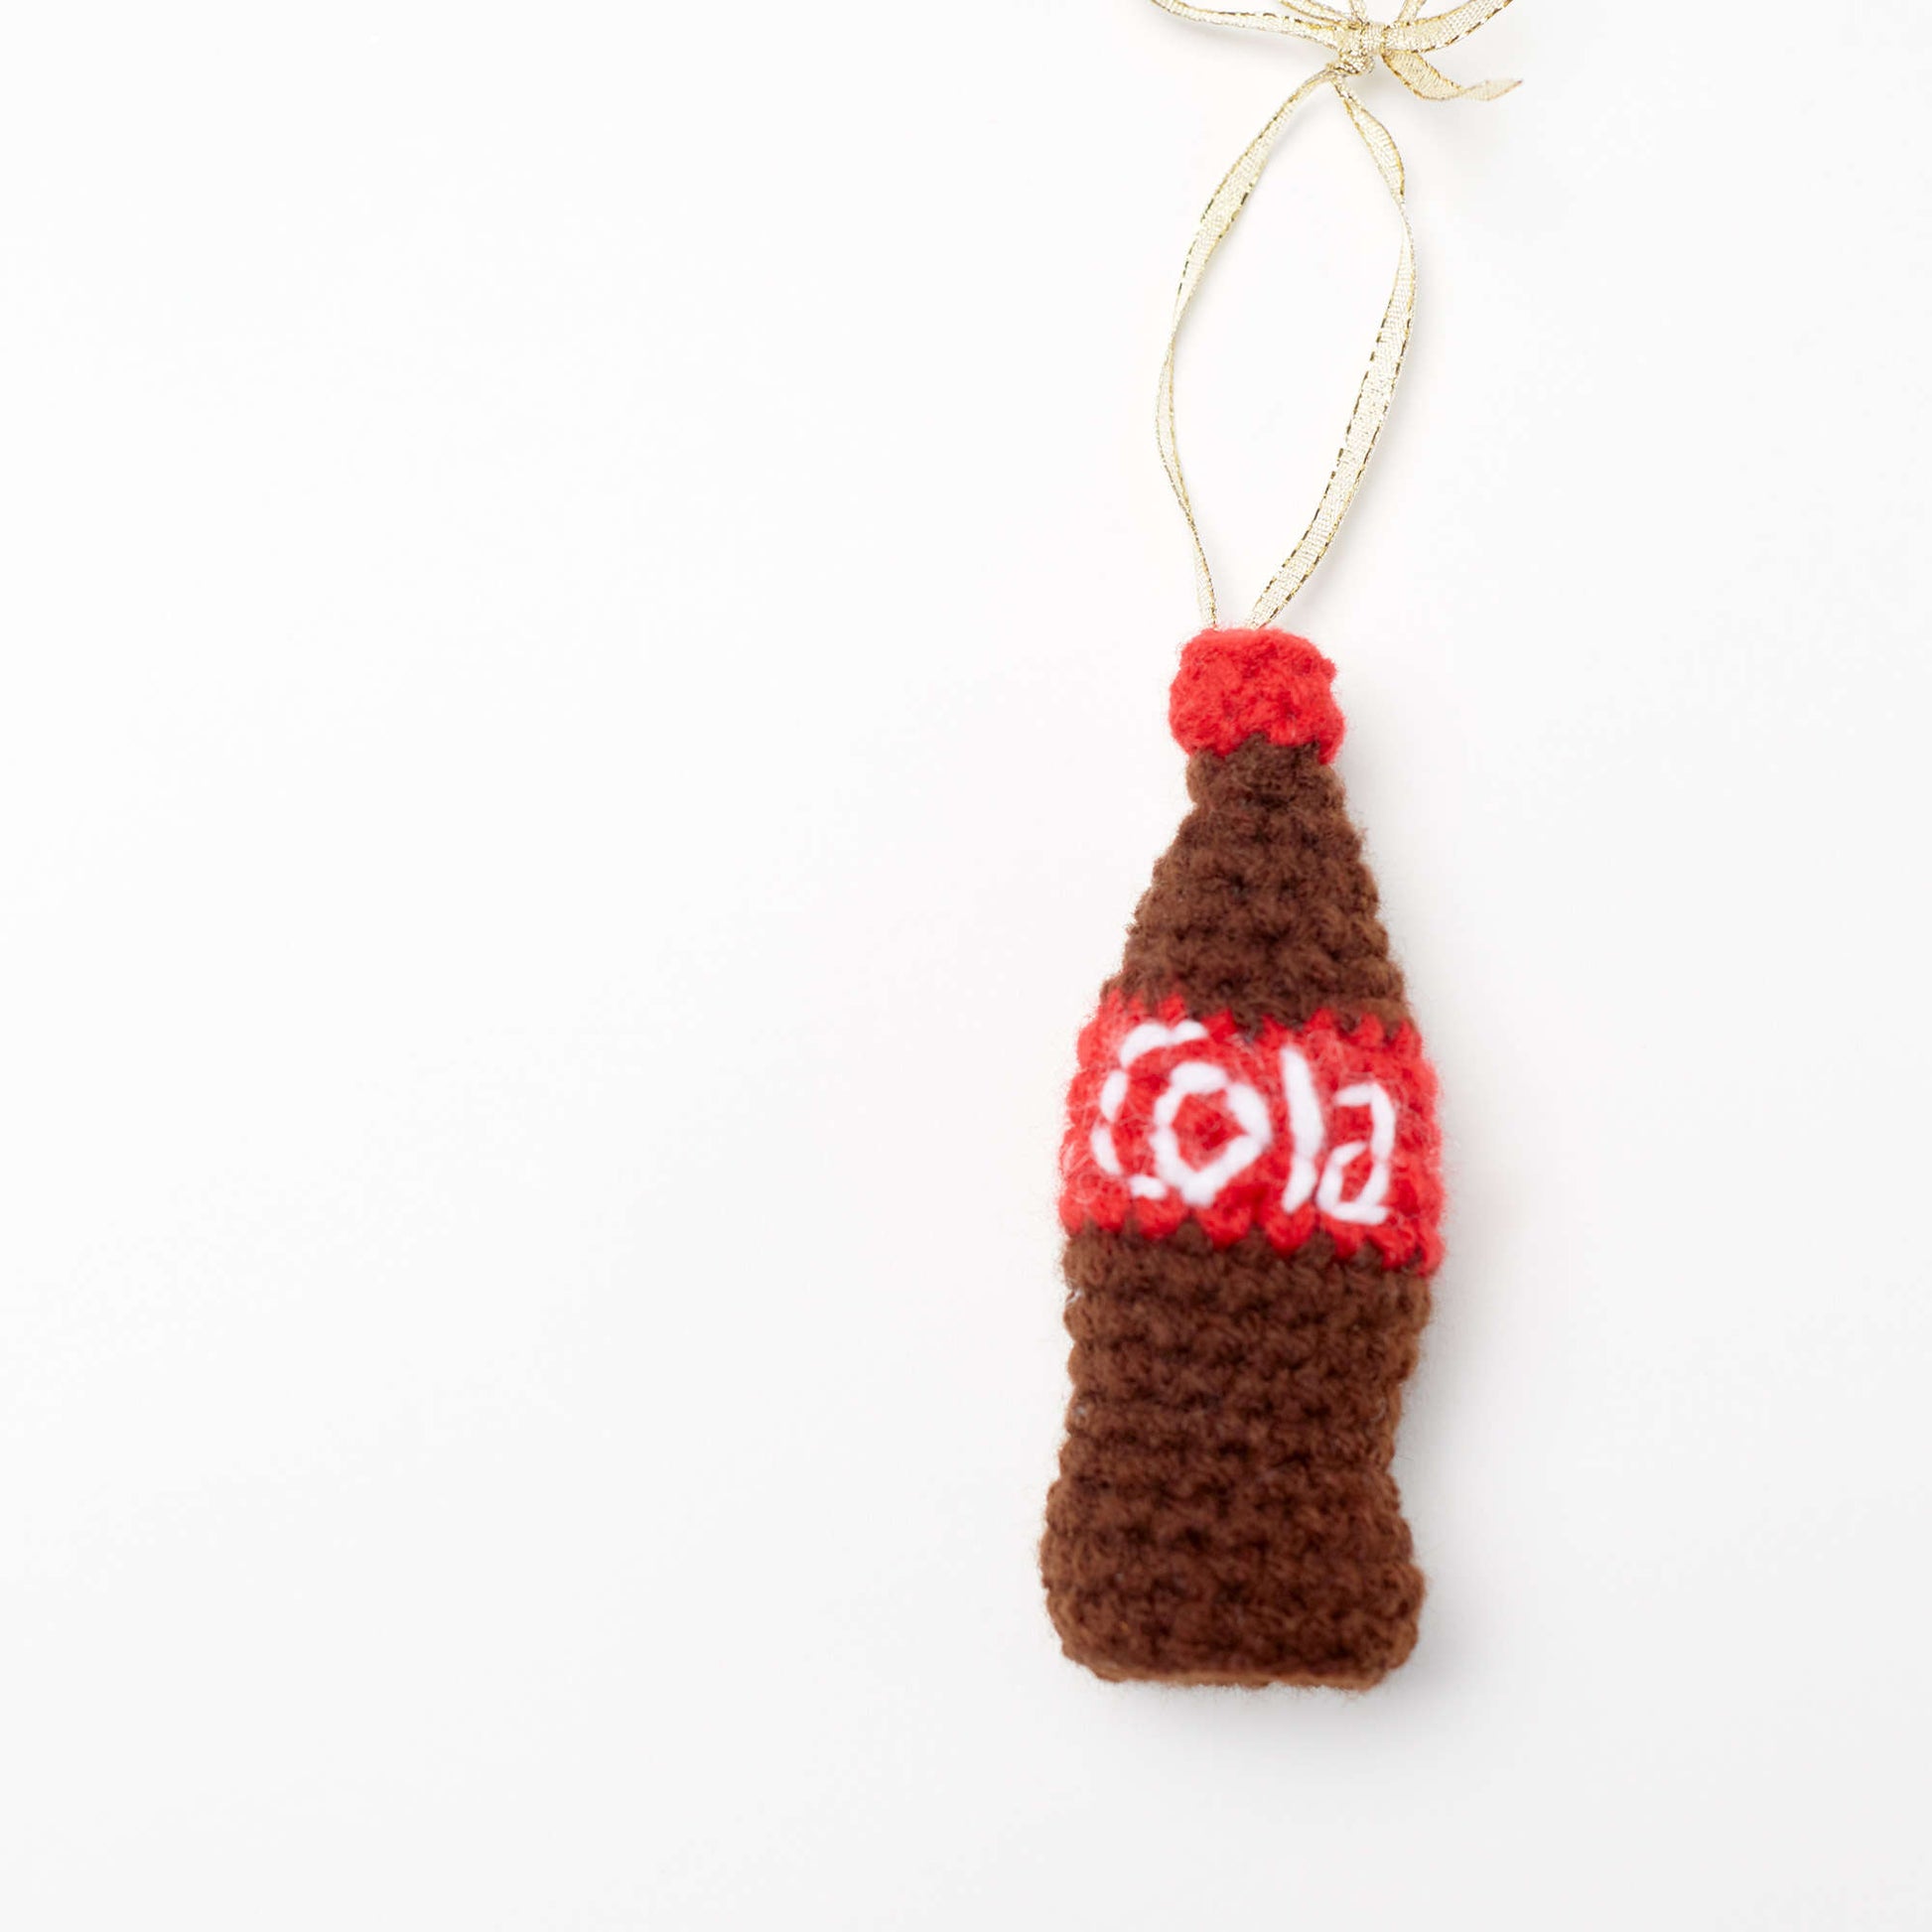 Free Red Heart Bottle Of Cola Ornament Crochet Pattern